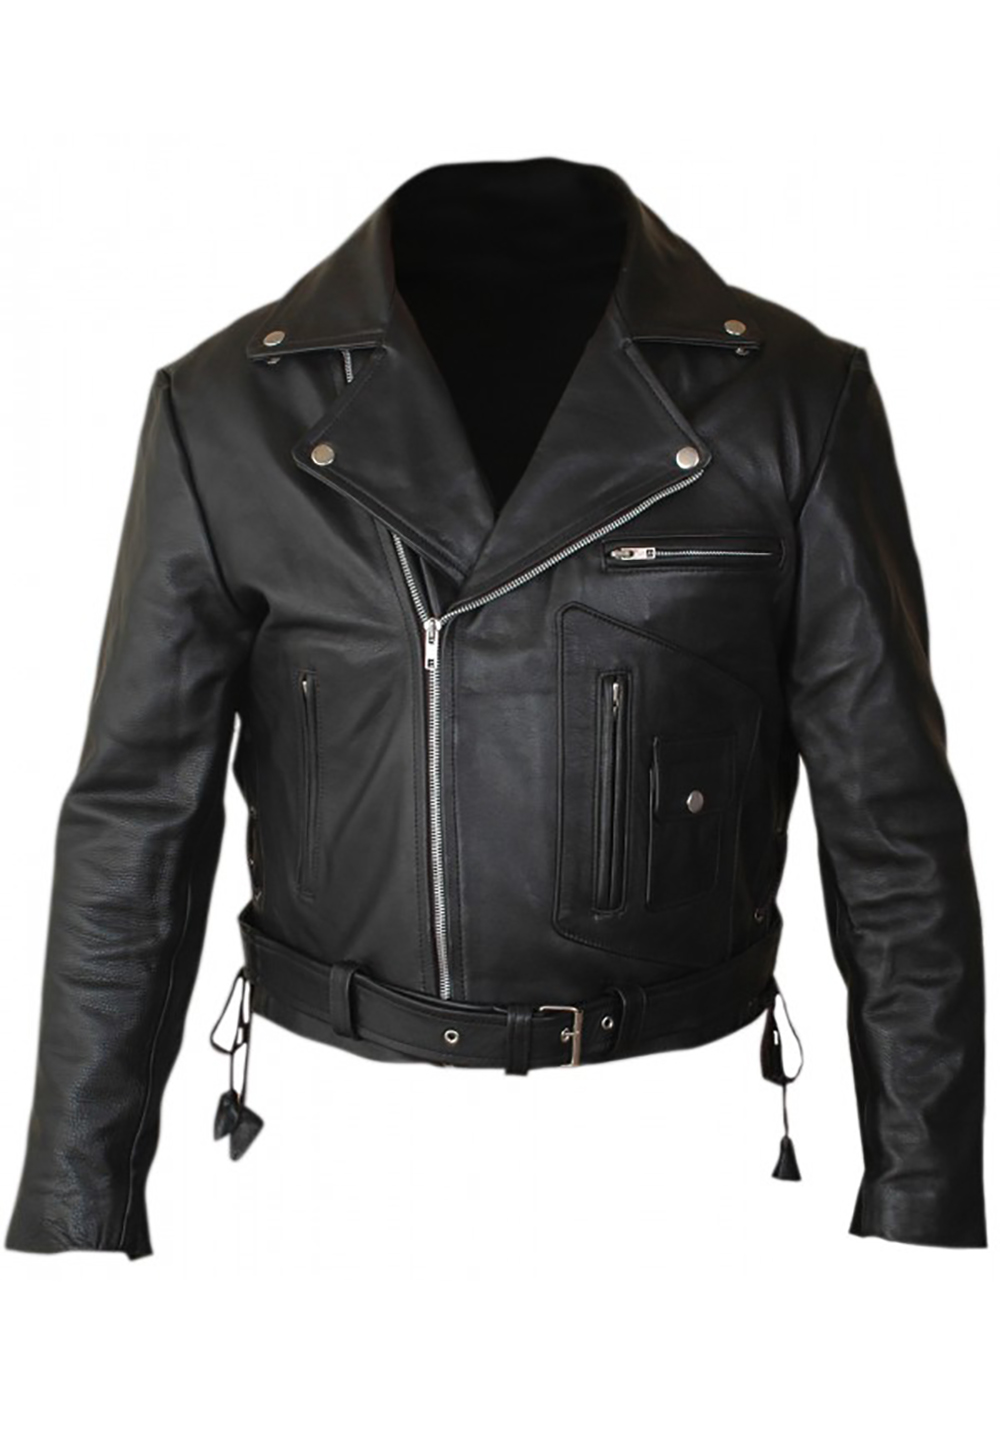 Terminator 2 leather jacket